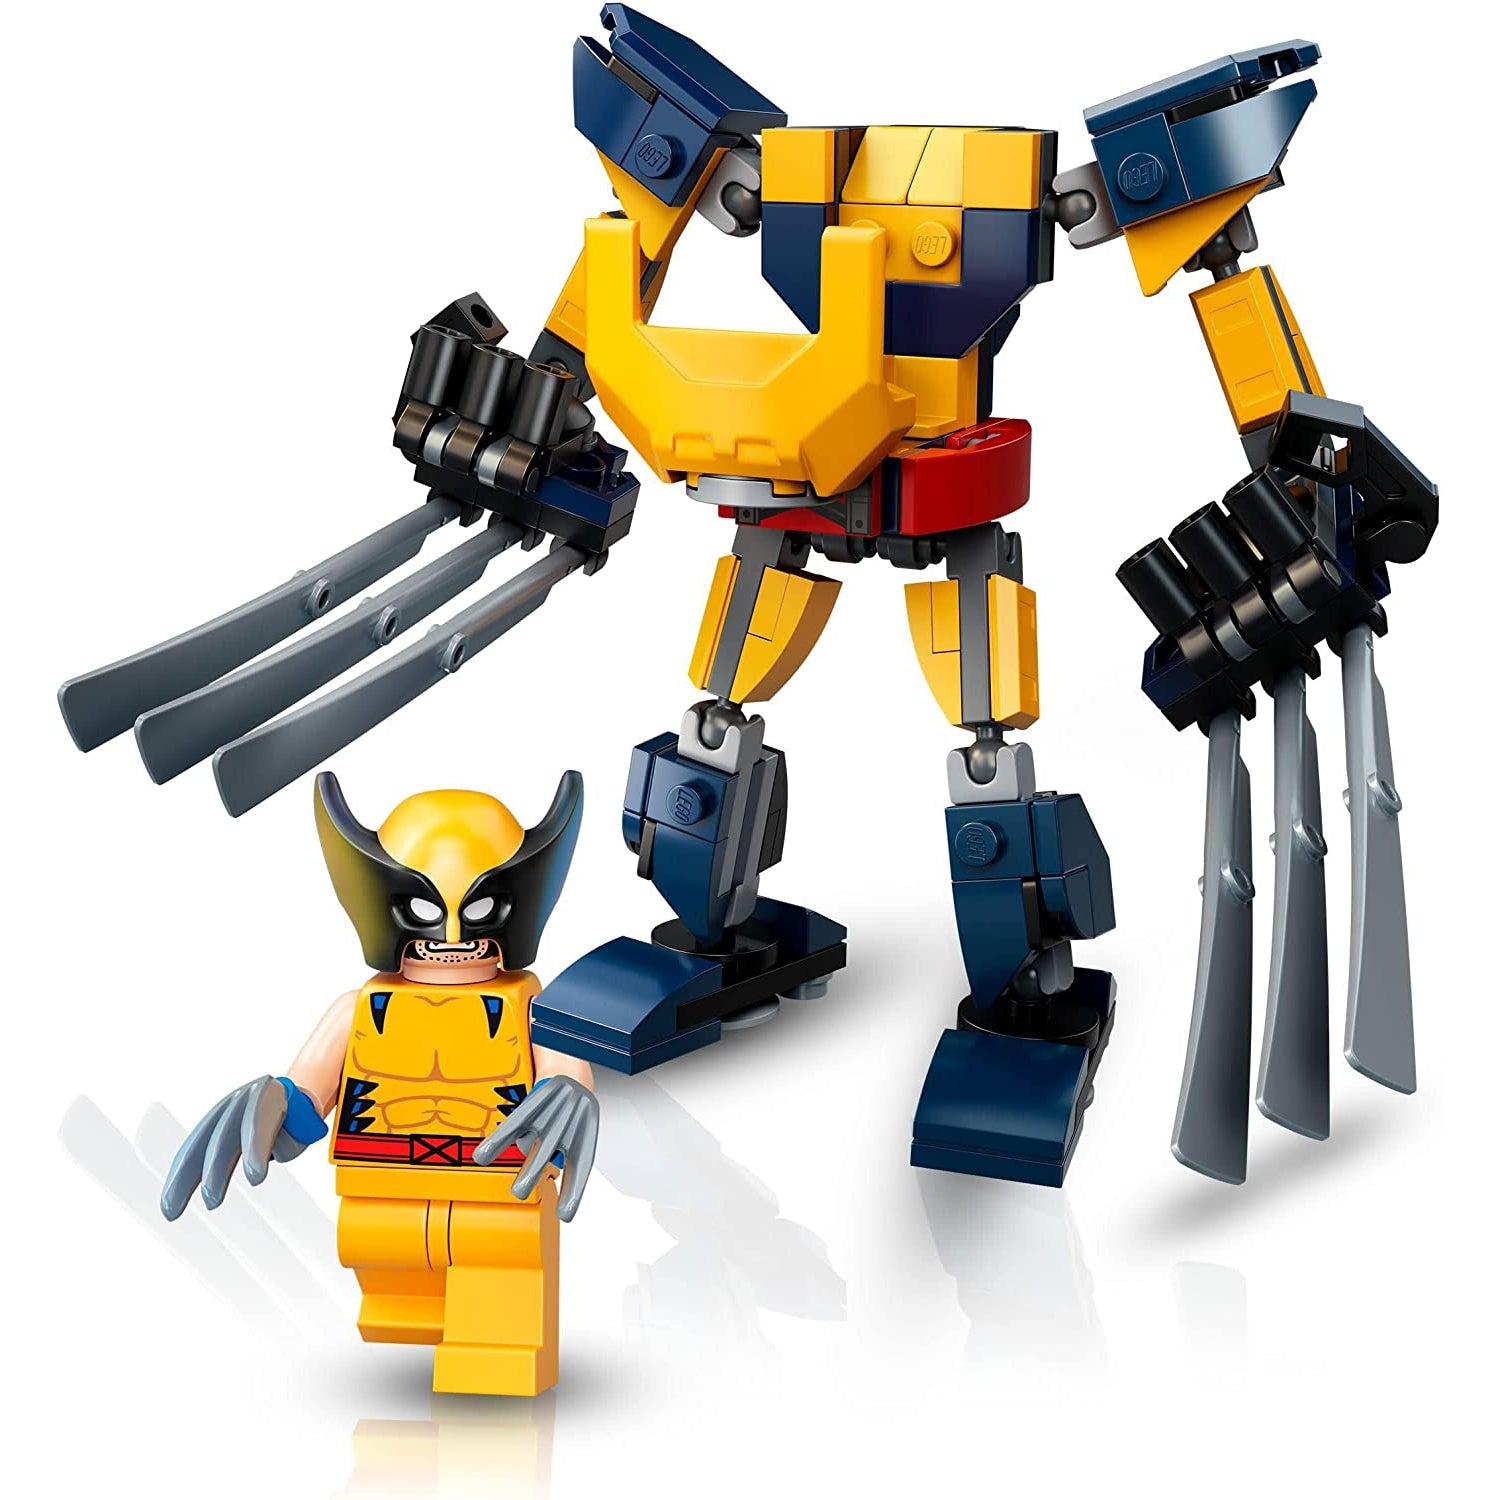 LEGO 76202 Marvel Wolverine Mech Armour Action Figure Set